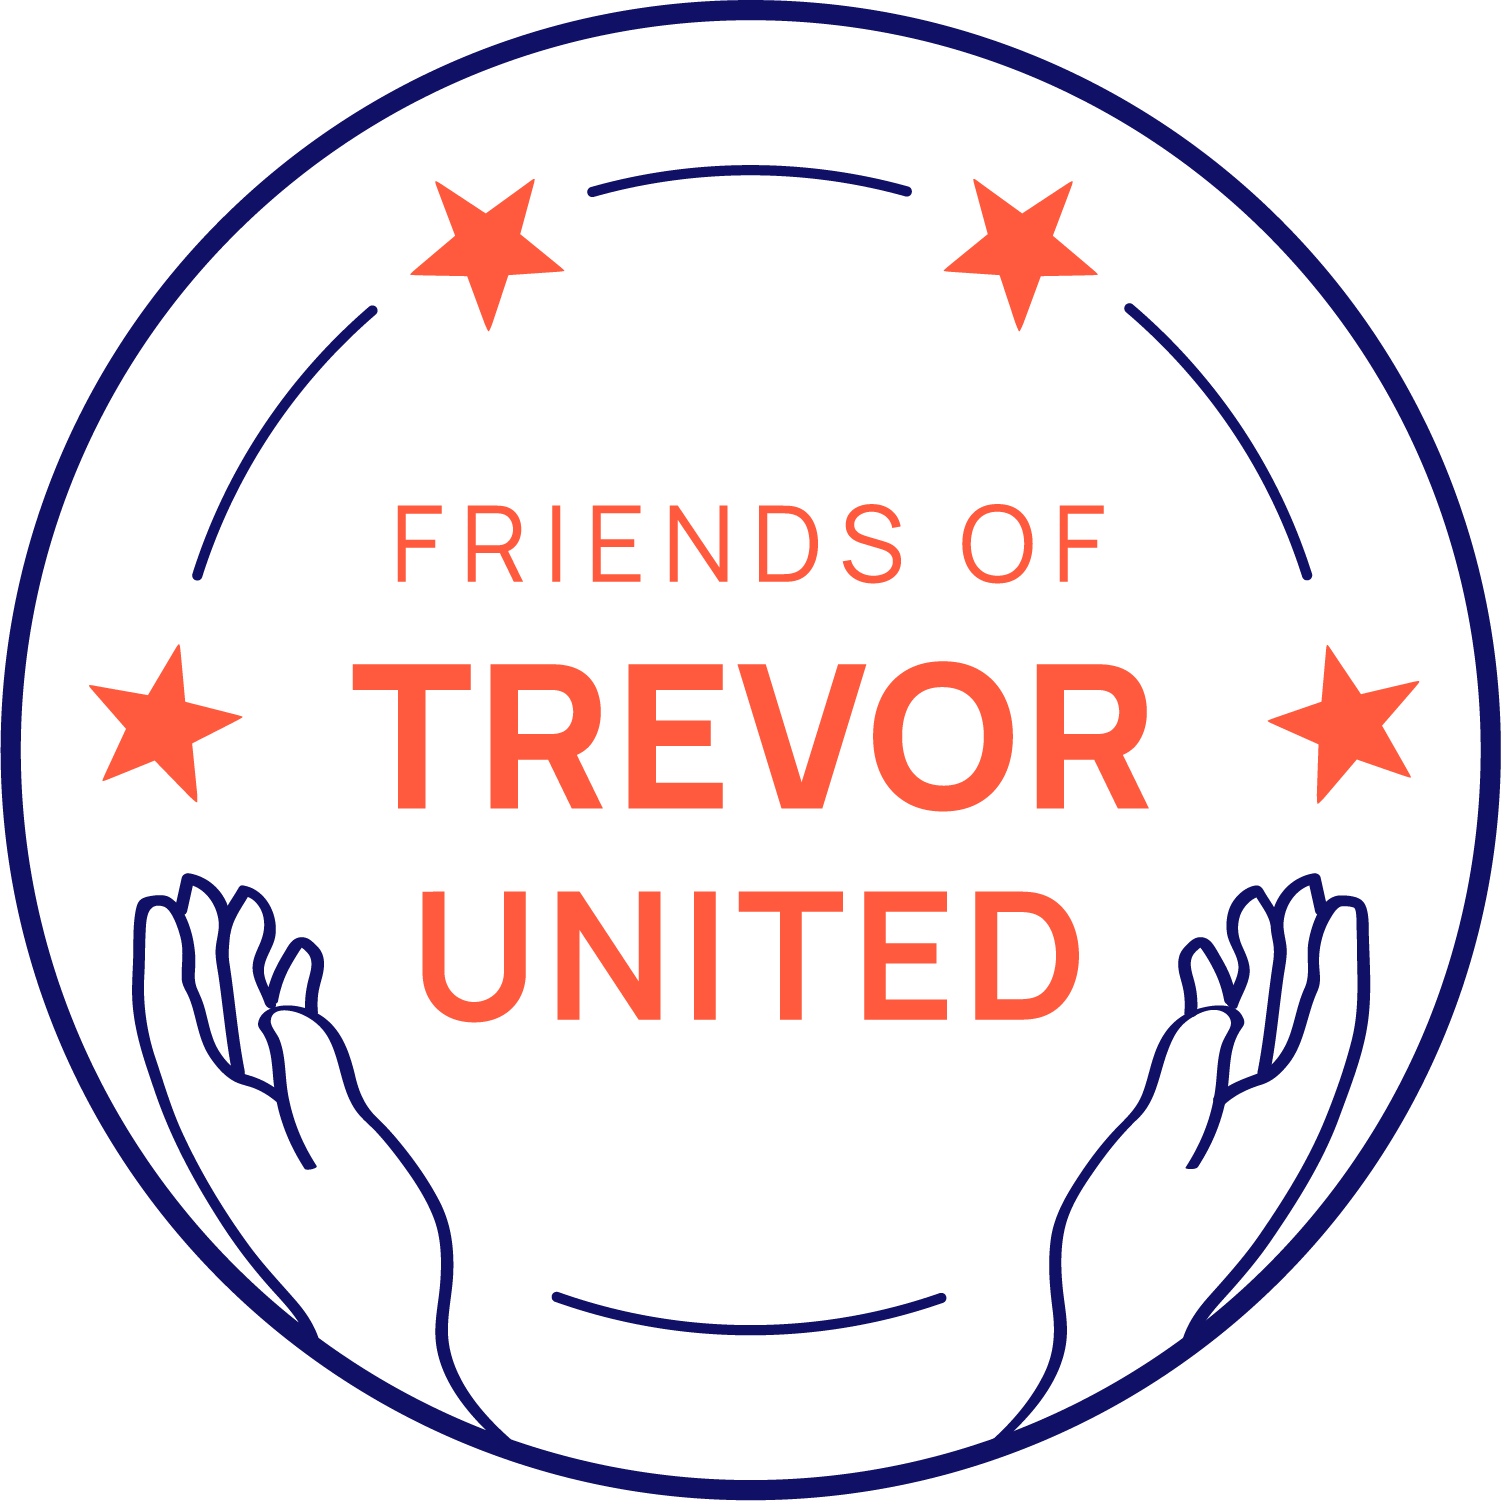 Friends of Trevor United Logo in blue and orange color